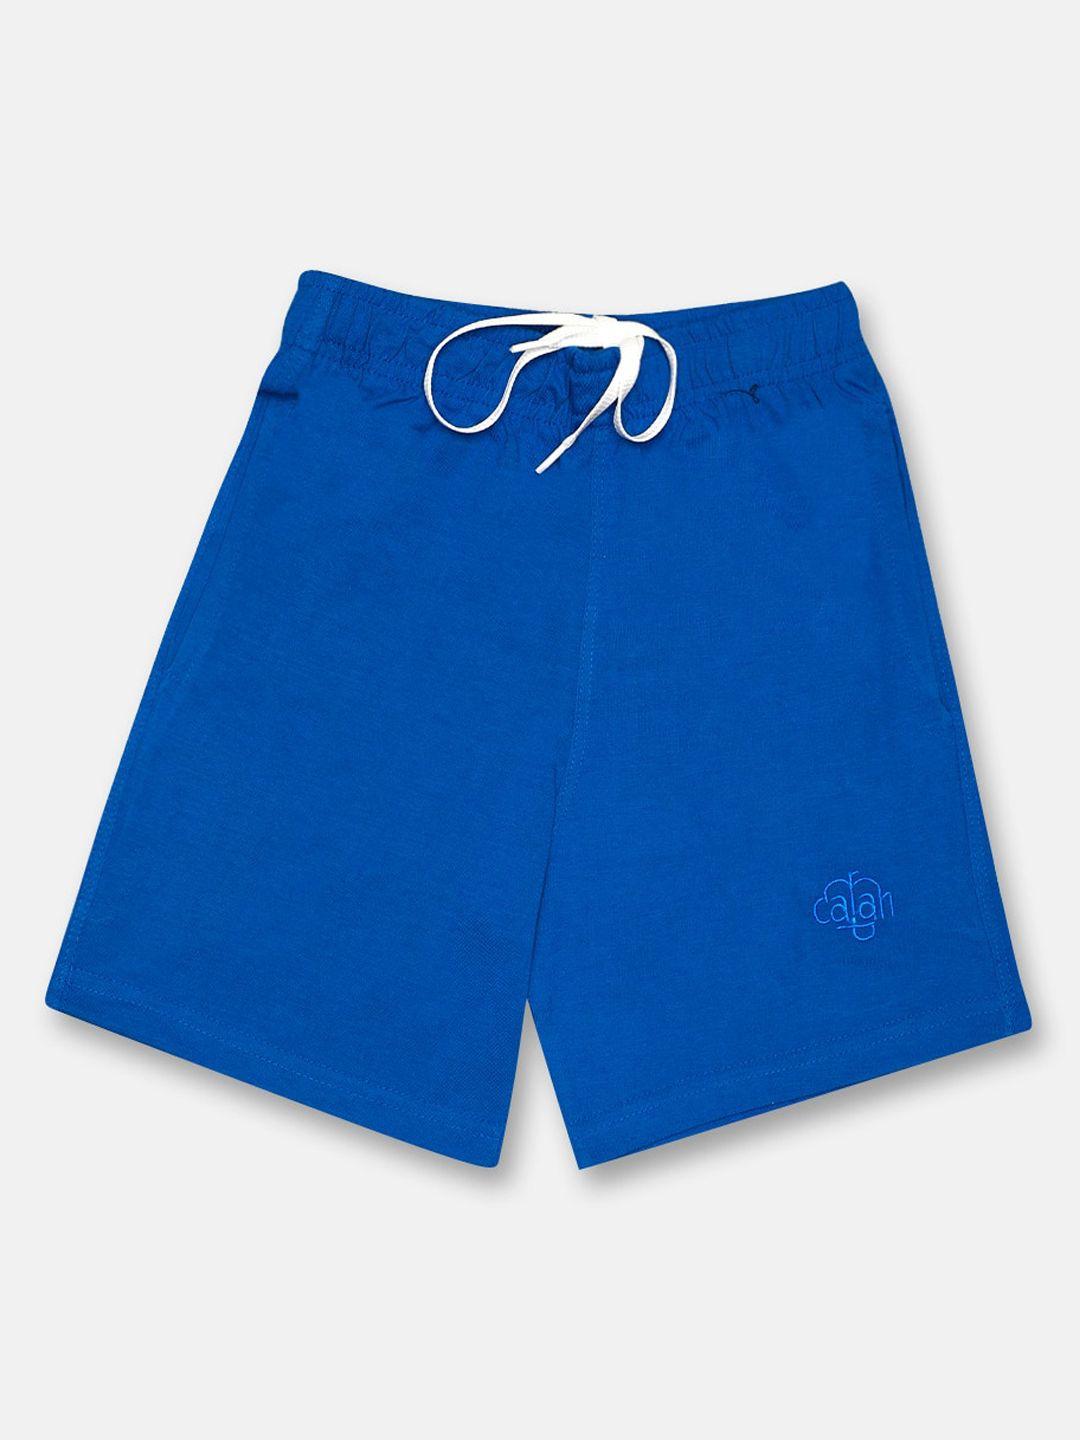 chimprala unisex kids blue mid-rise regular shorts